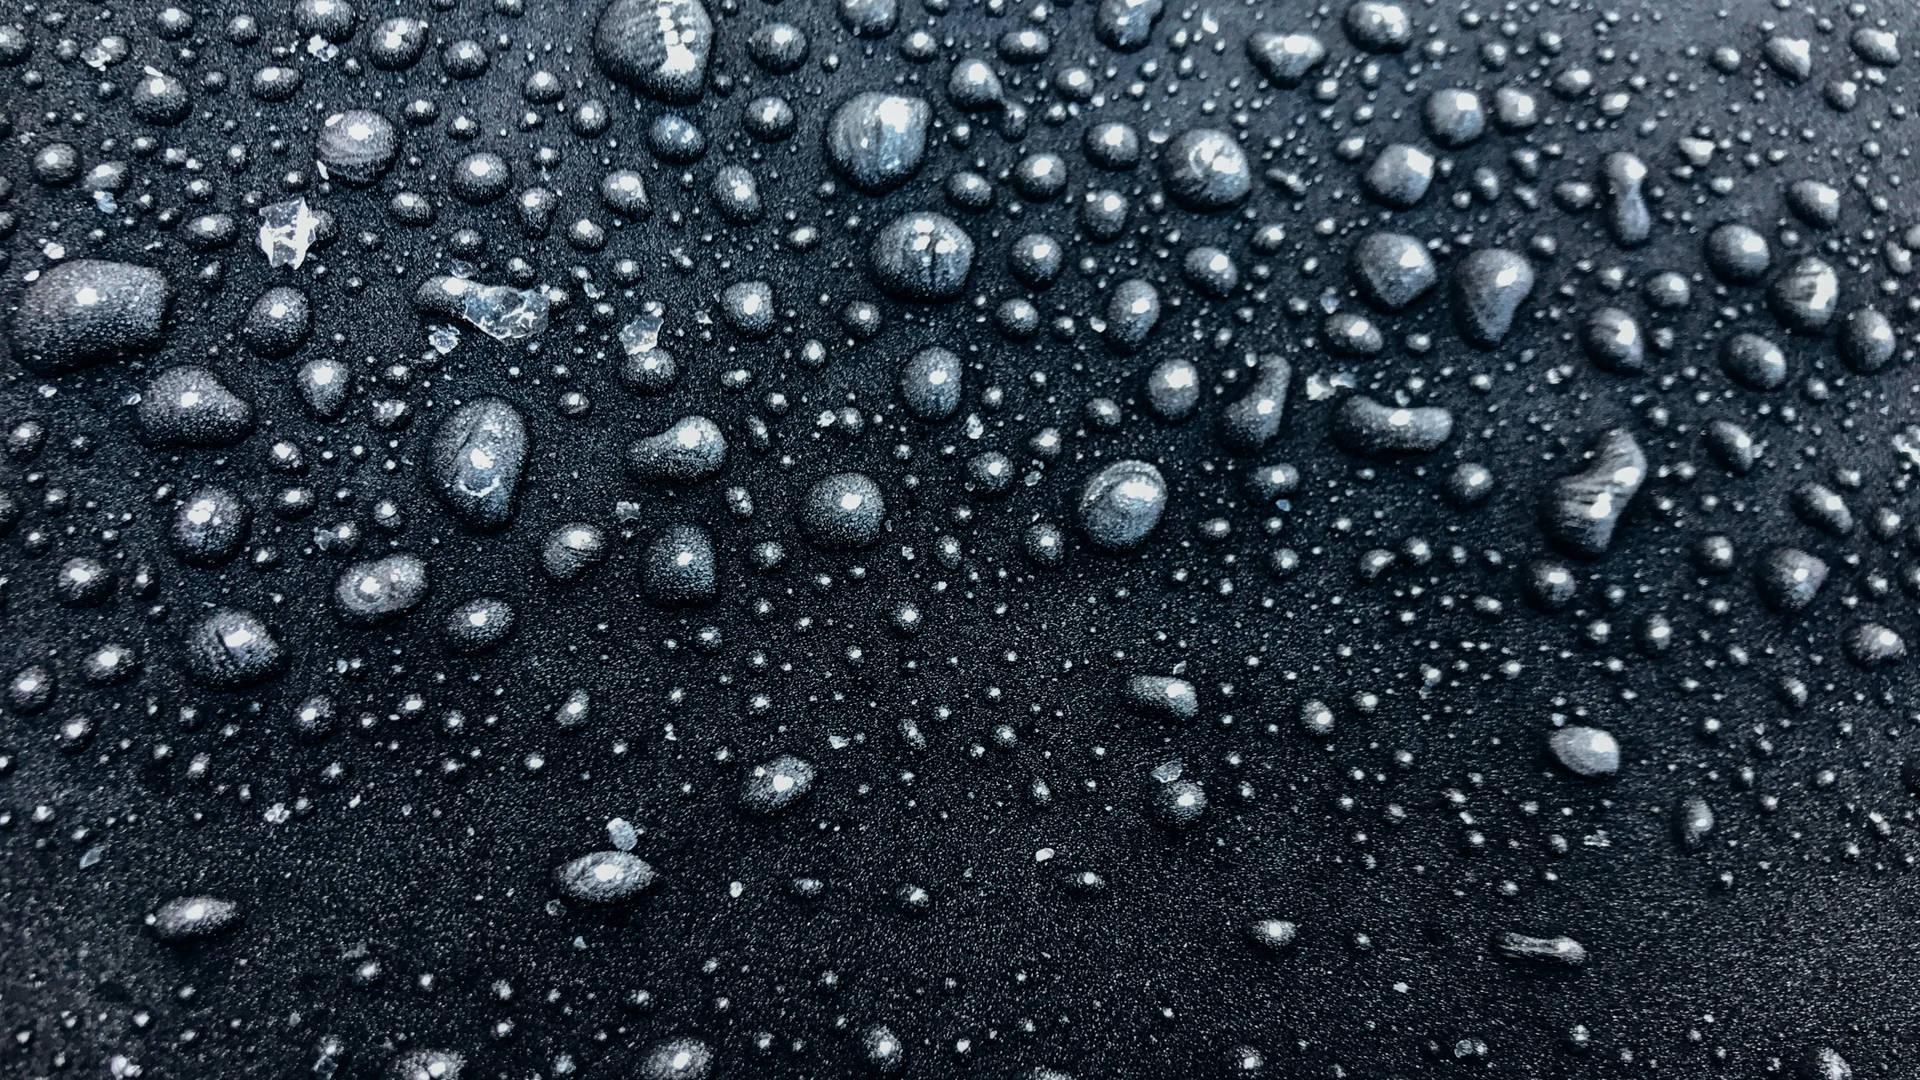 Caption: Enigmatic 4d Ultra Hd Close-up Of Matte Black Raindrops